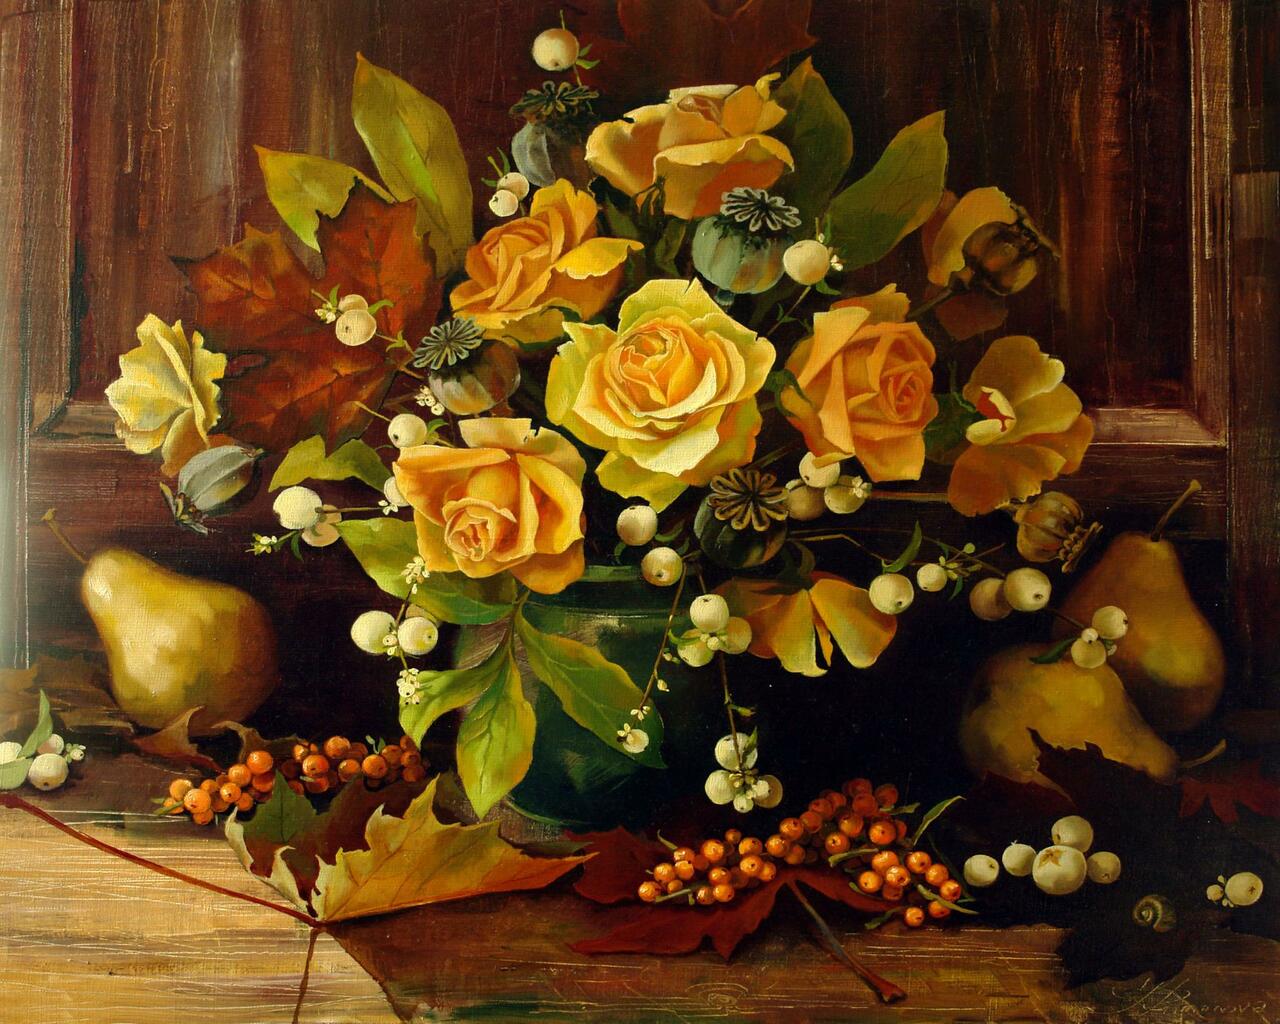 #stillLife  Painted #portraits for #commission #grape #nature #art #roses #flowers #vase #love #autumn http://t.co/Cs6vs27P6J